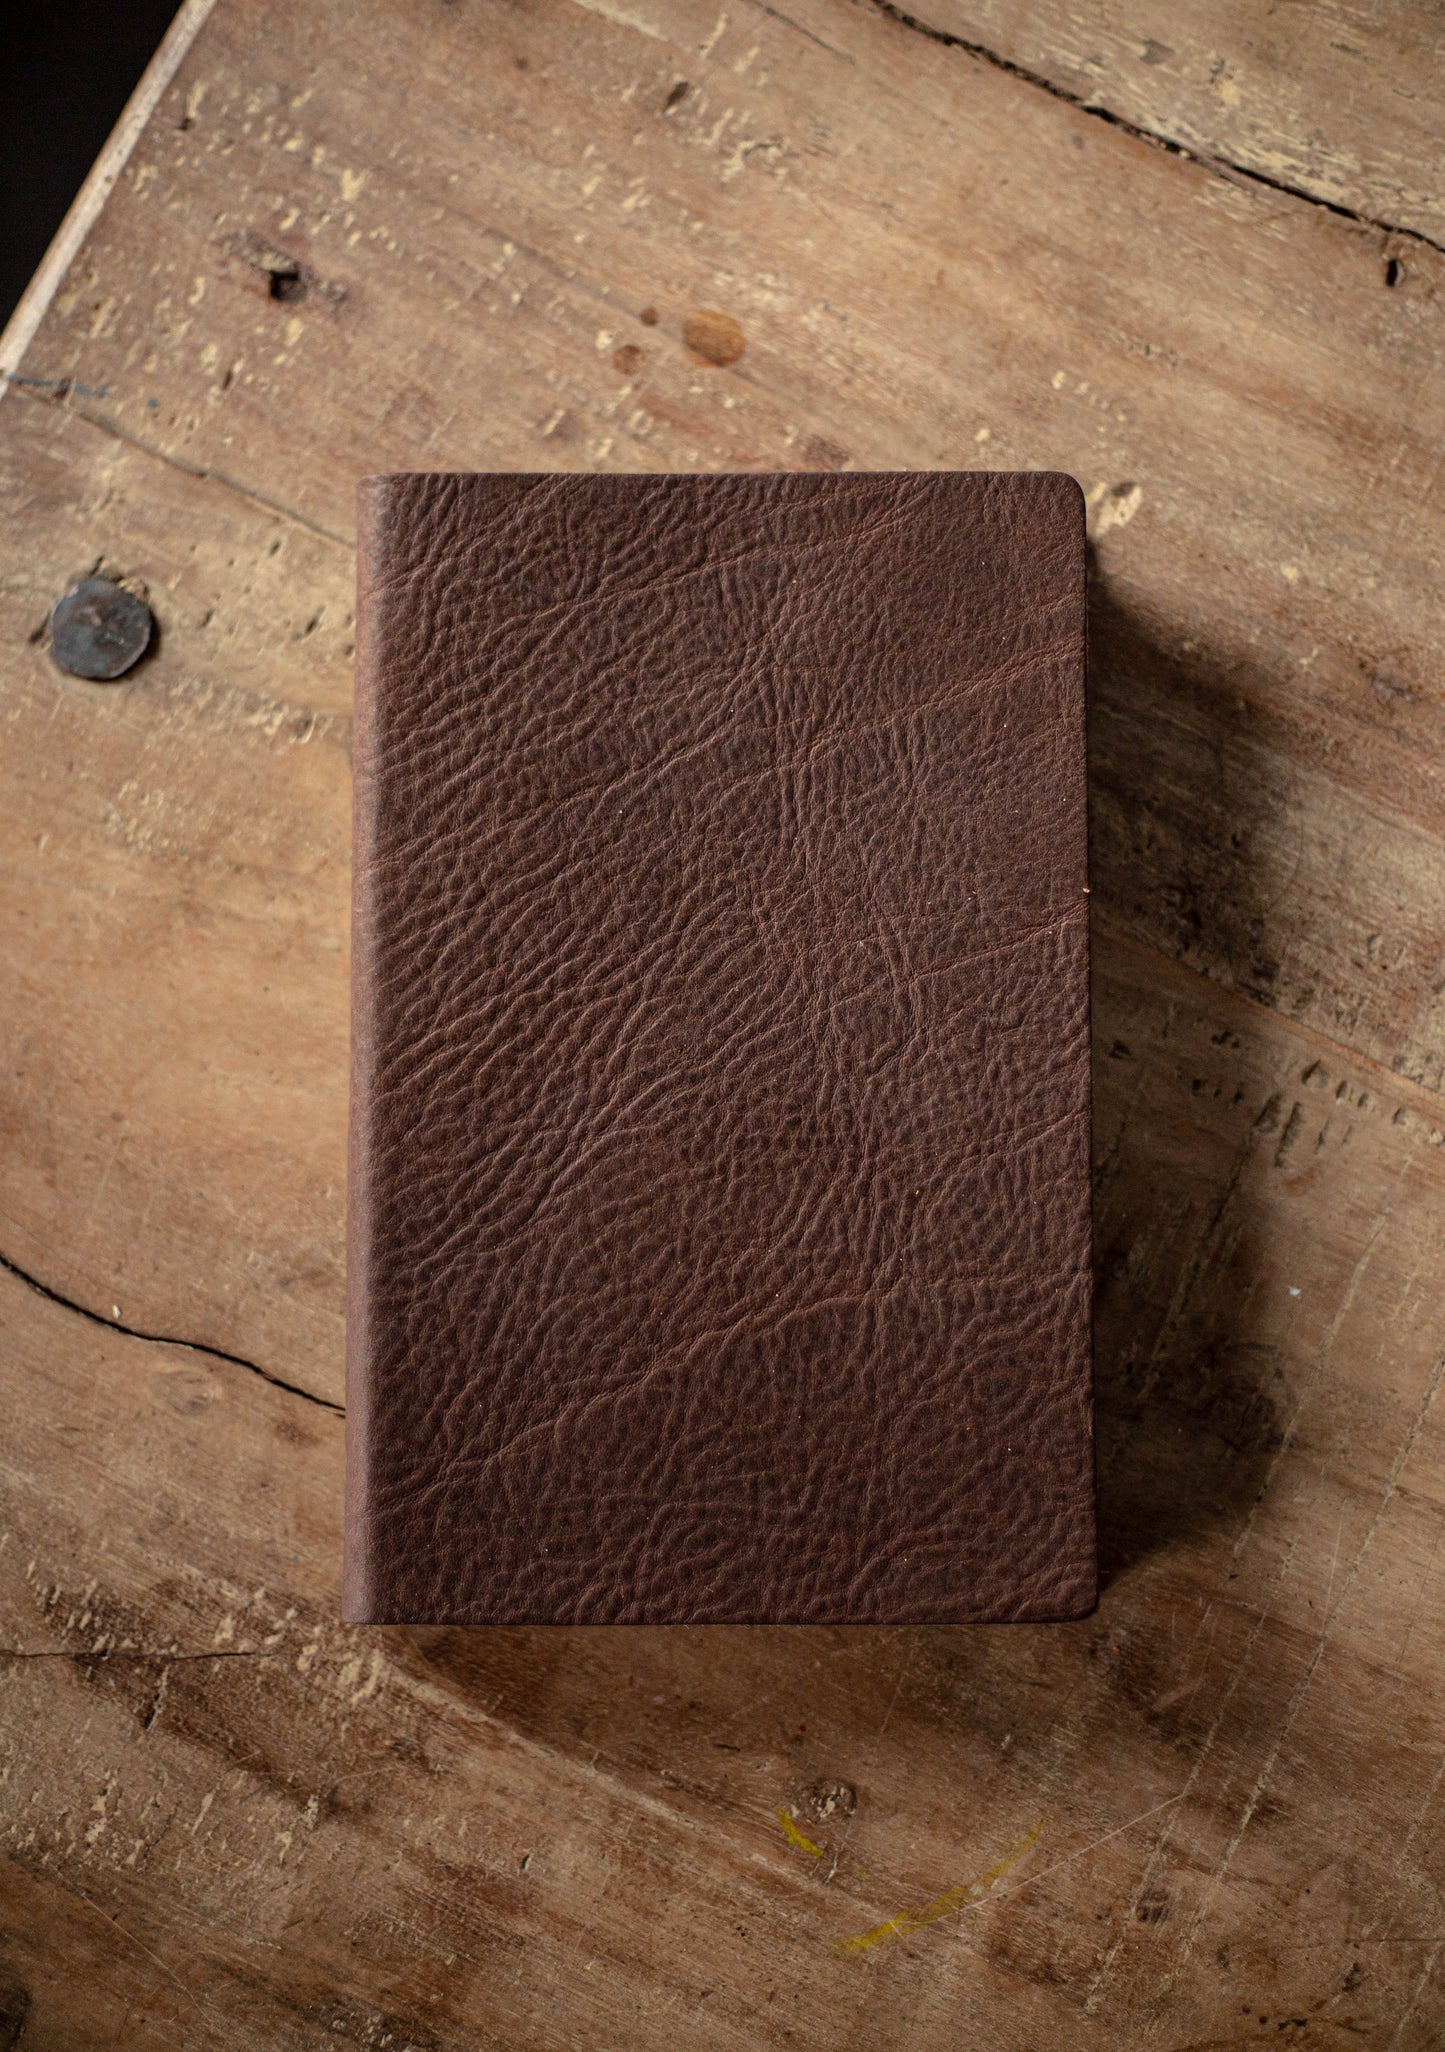 Large Print Handbound Leather Bible - ESV